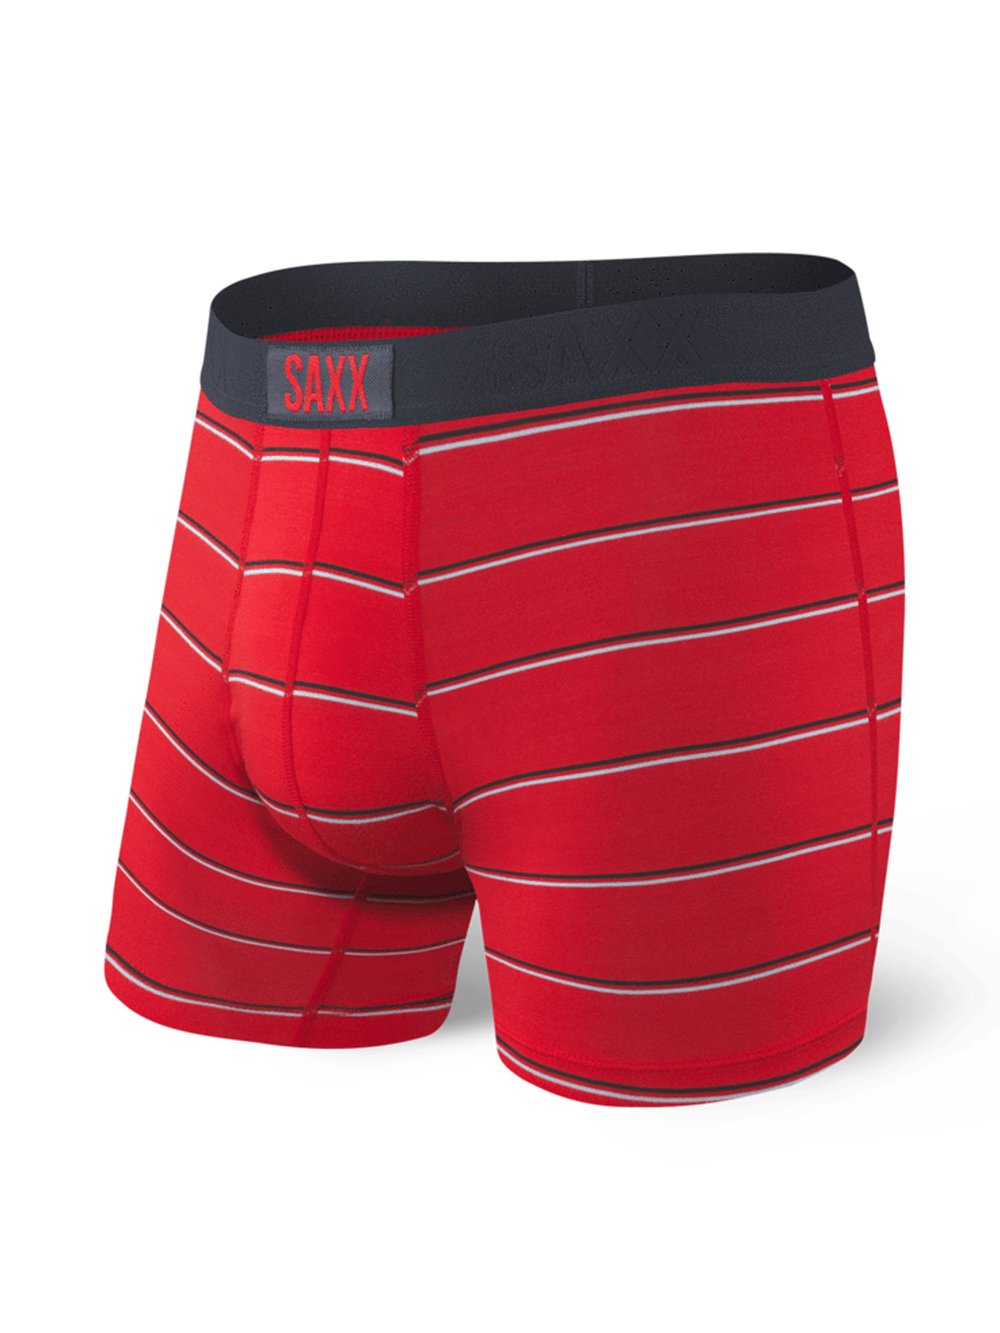 Saxx Vibe Boxer Brief-Red NO Thanks- NTR